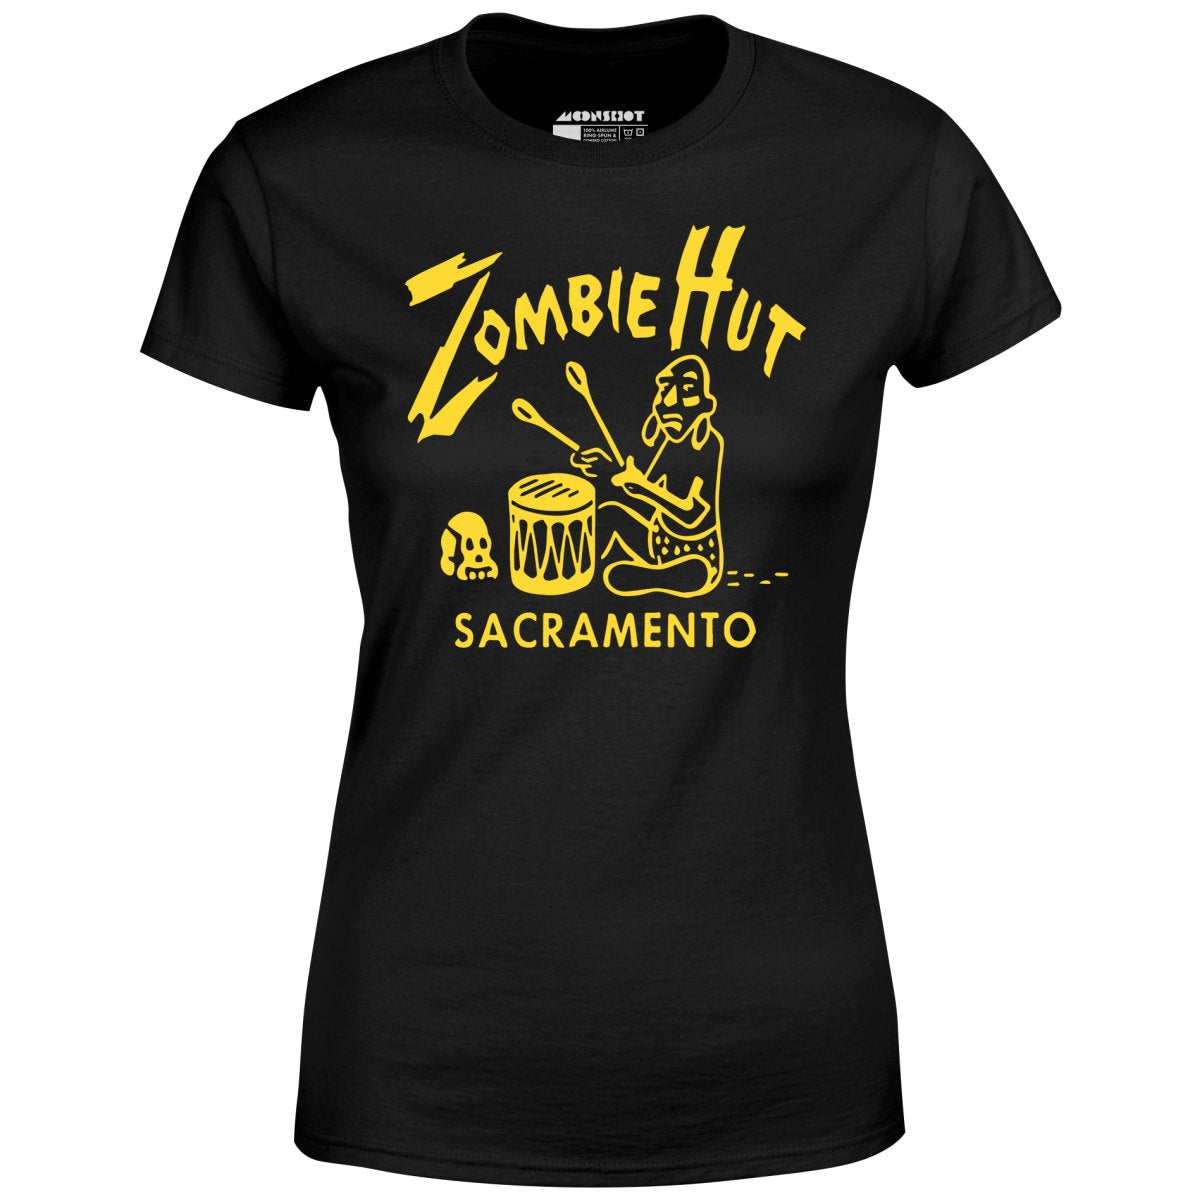 Zombie Hut - Sacramento, CA - Vintage Tiki Bar - Women's T-Shirt